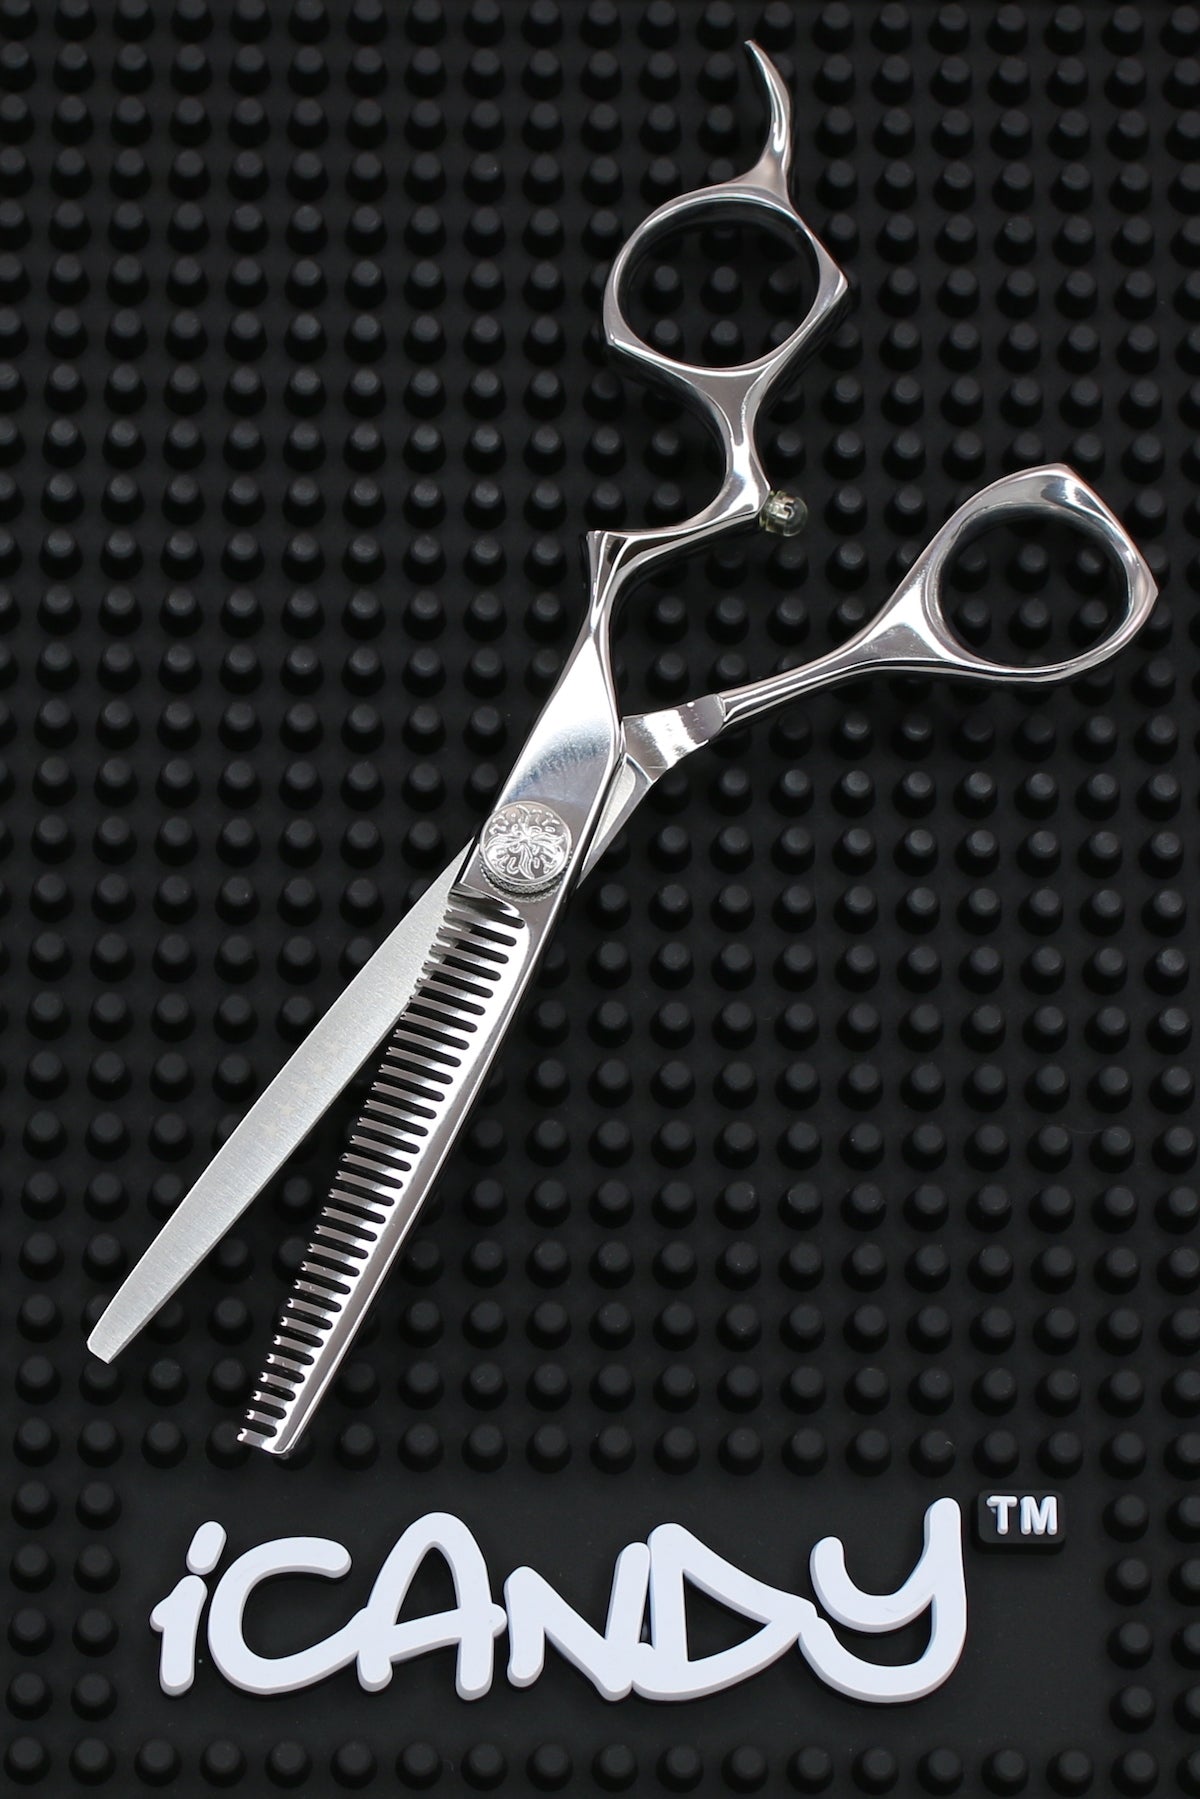 iCandy Goddess Athena-CT Thinning Scissors (6 inch) - iCandy Scissors